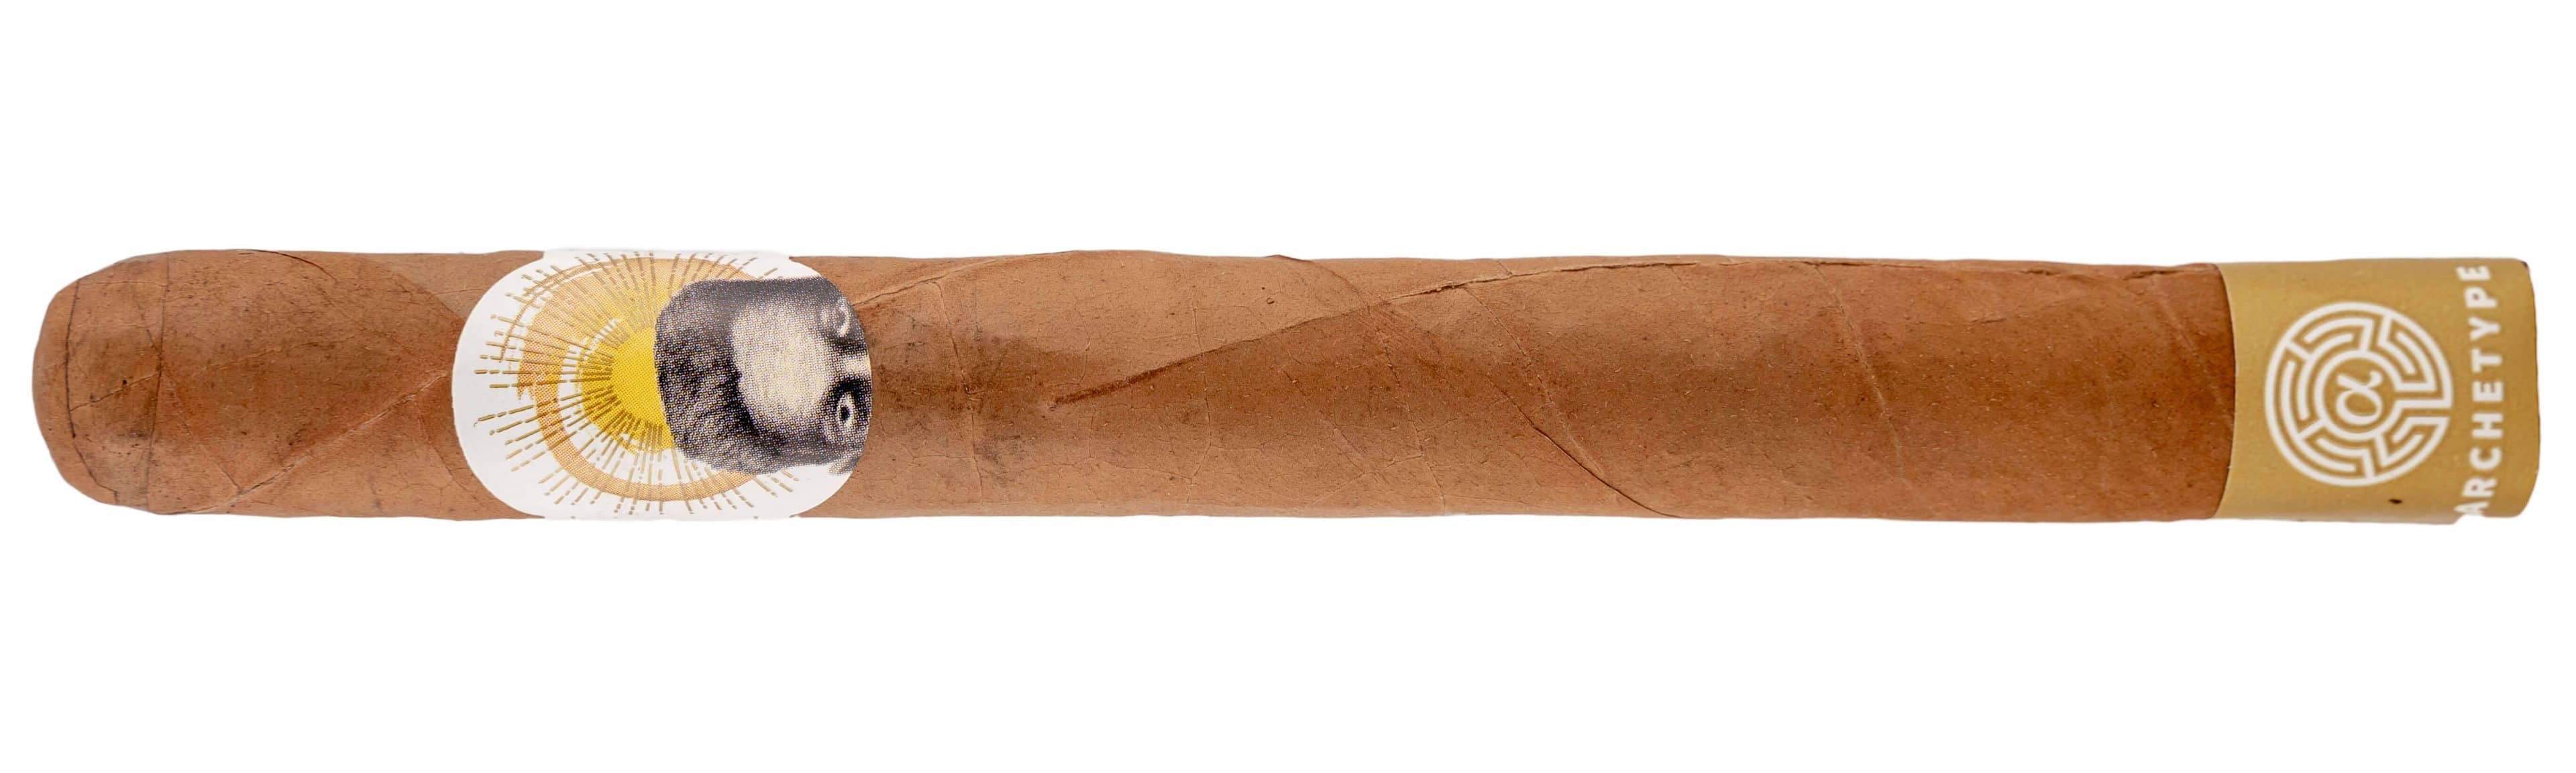 Blind Cigar Review: Ventura | Dreamstate Churchill